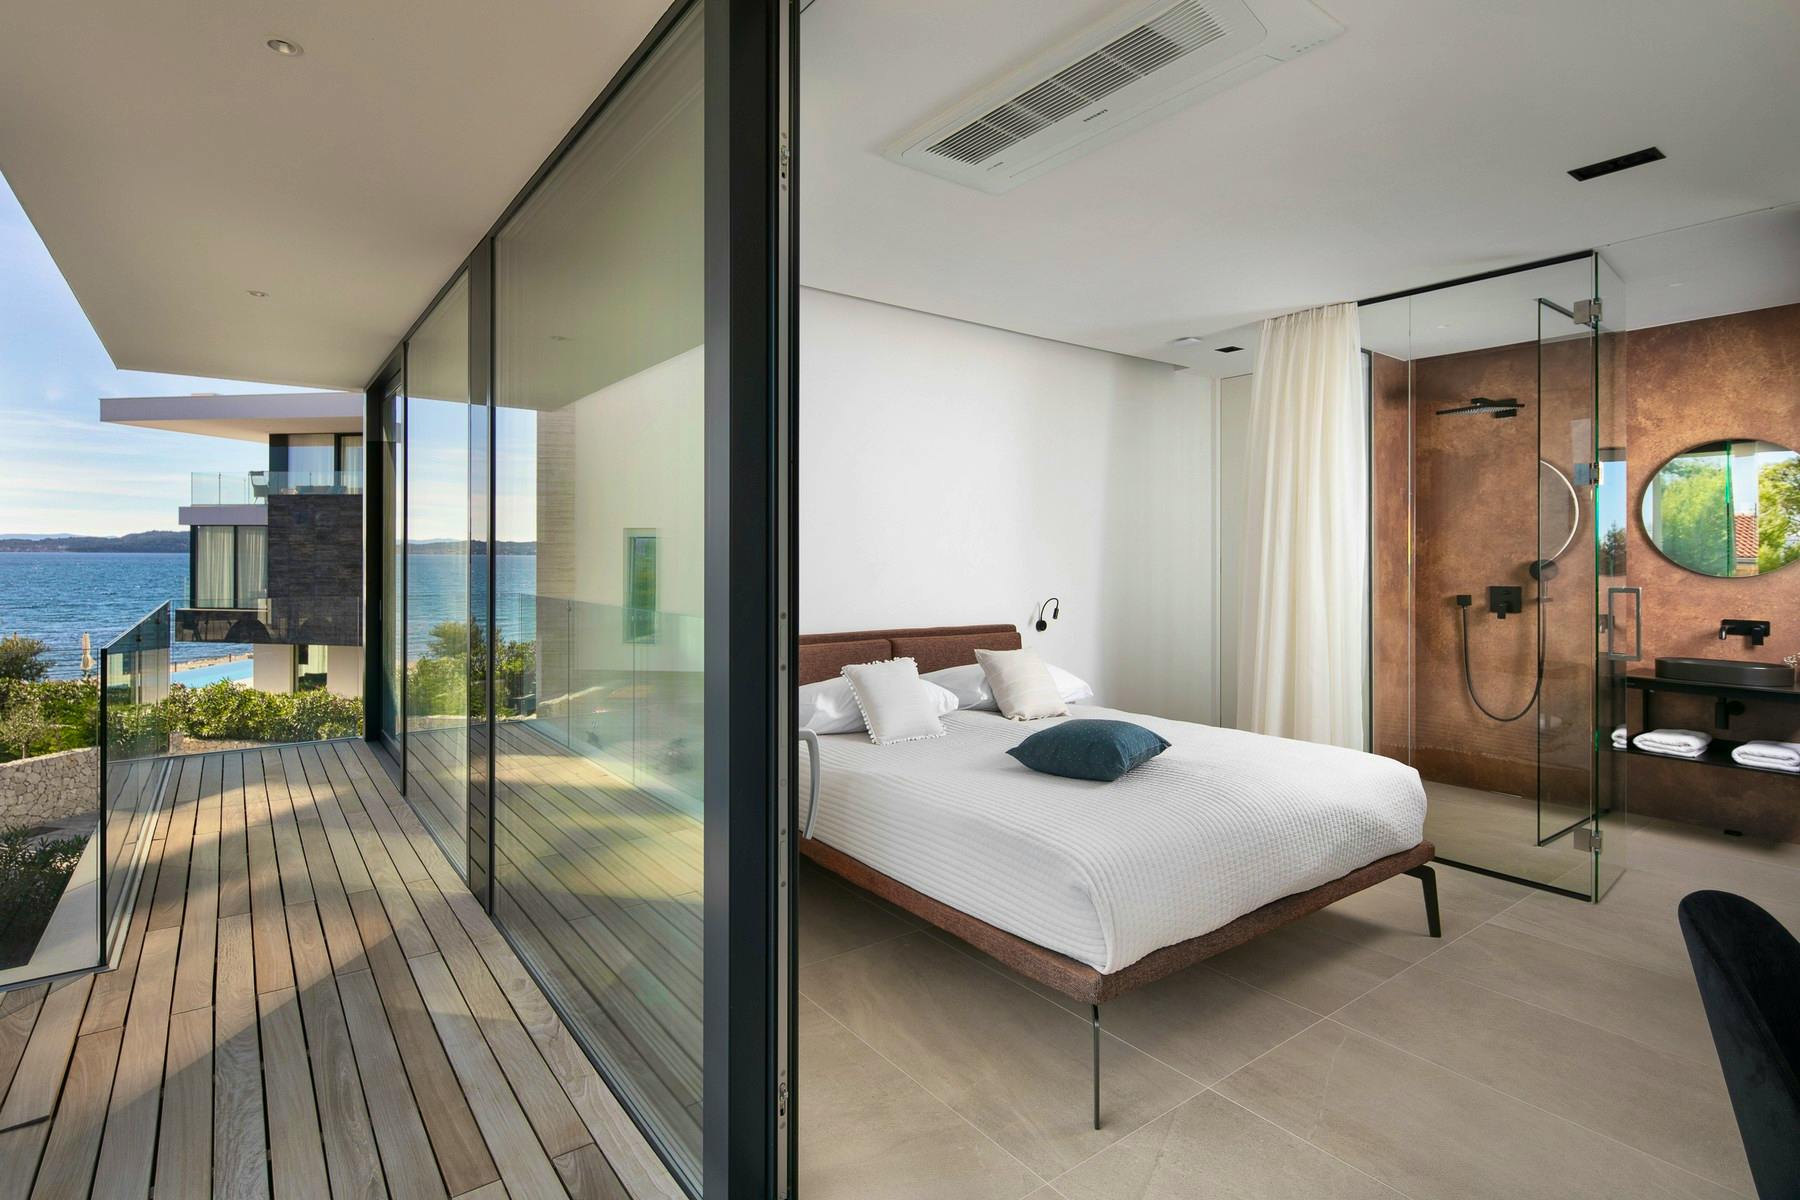 Comfortable en-suite bedroom with sea view